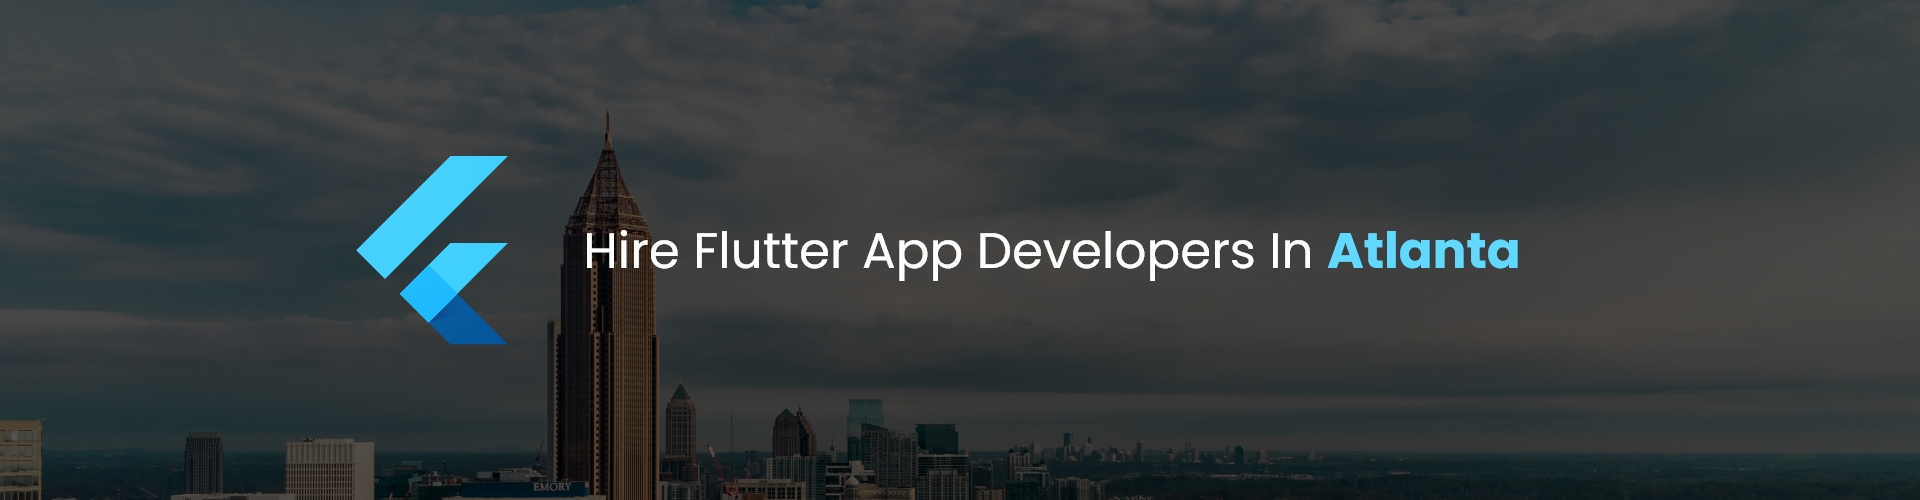 hire flutter app developers in atlanta